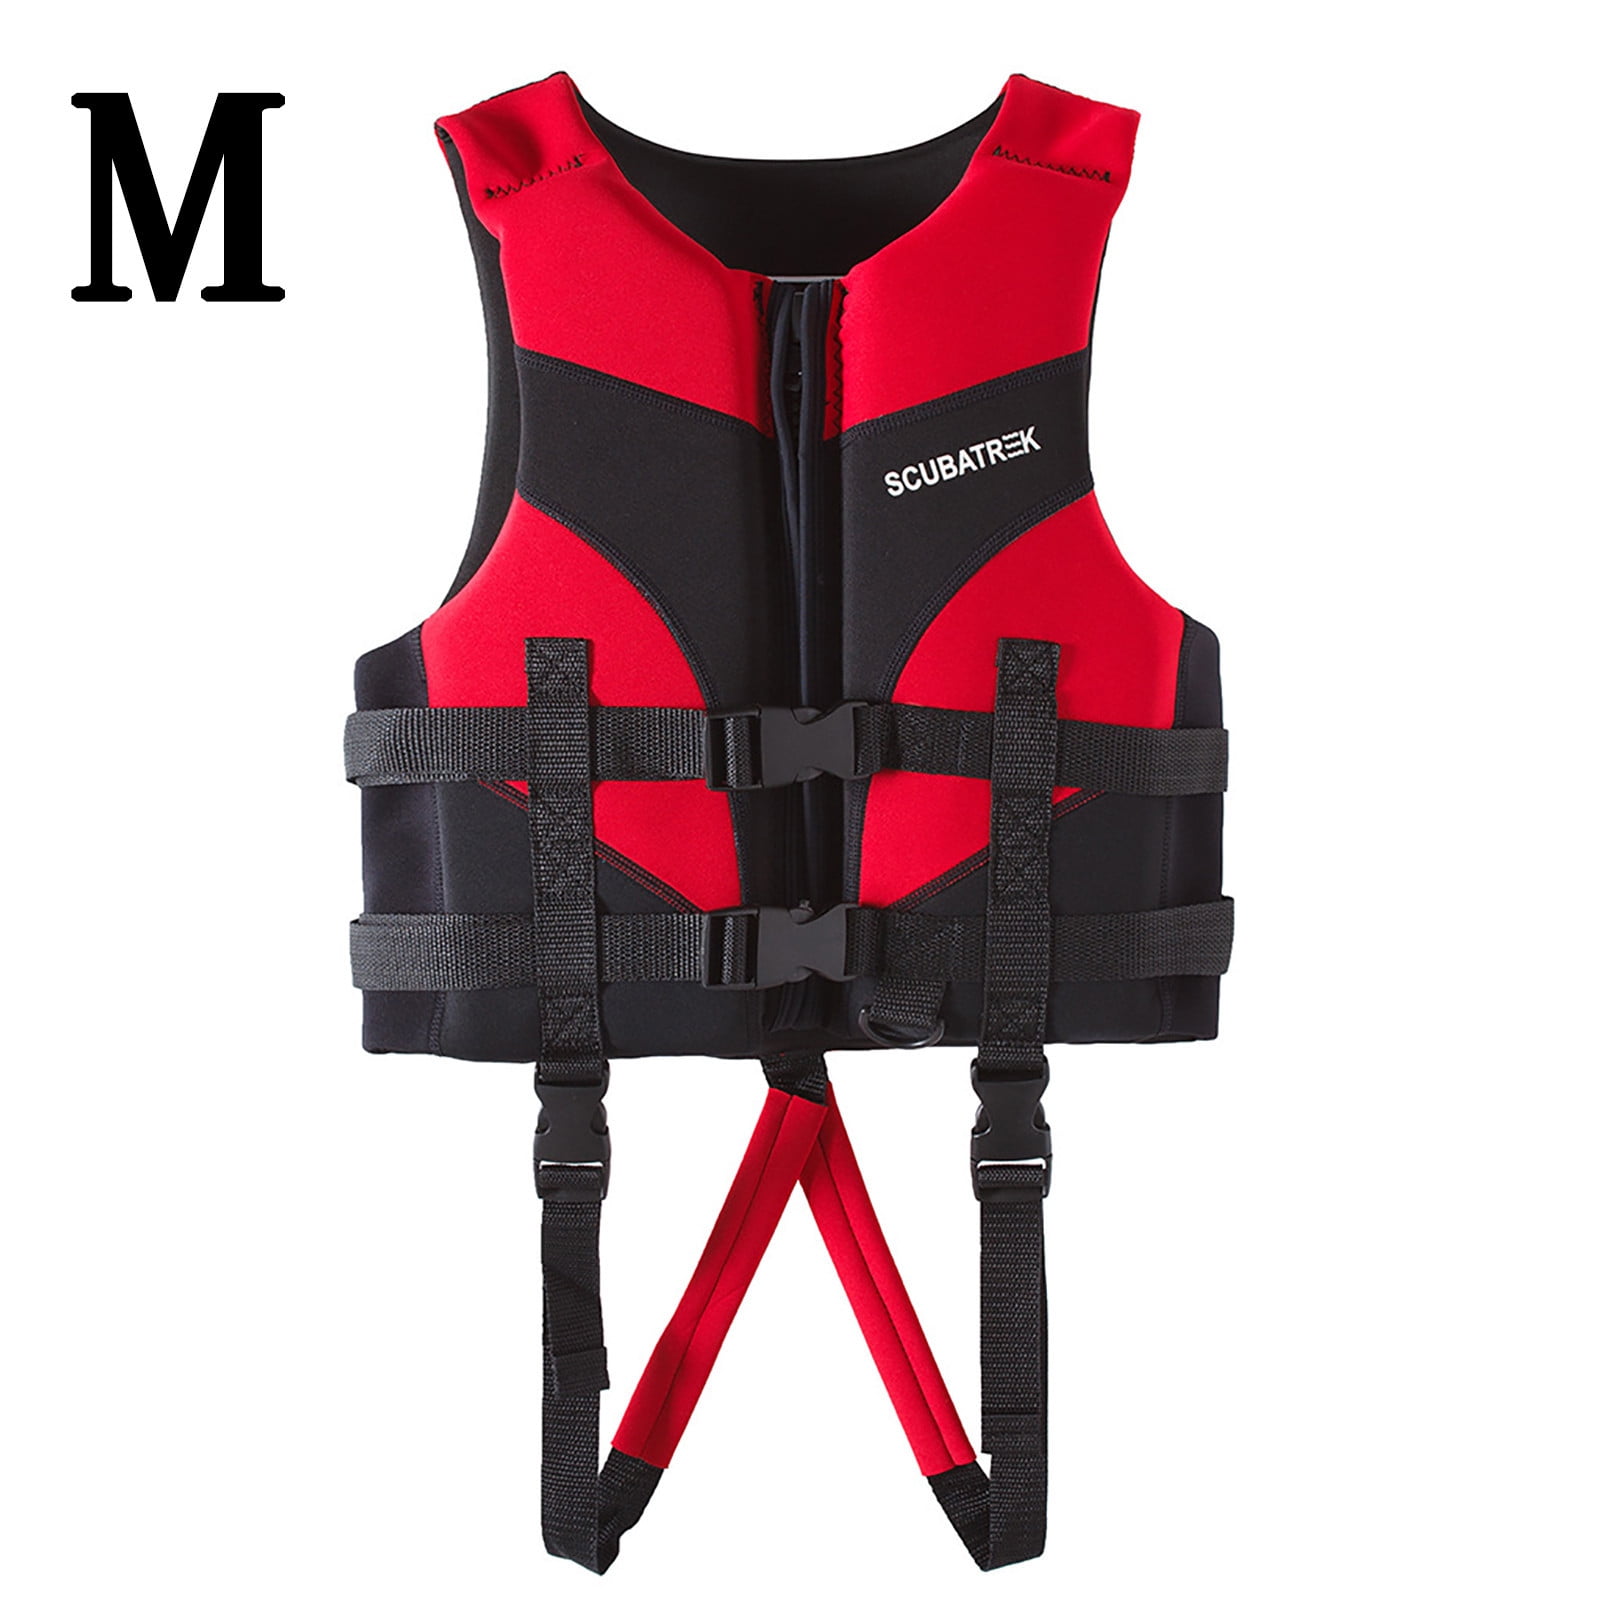 Adults Kids Watersport Life Jacket Fishing Kayak Ski Buoyancy Aid Sailing Vest 